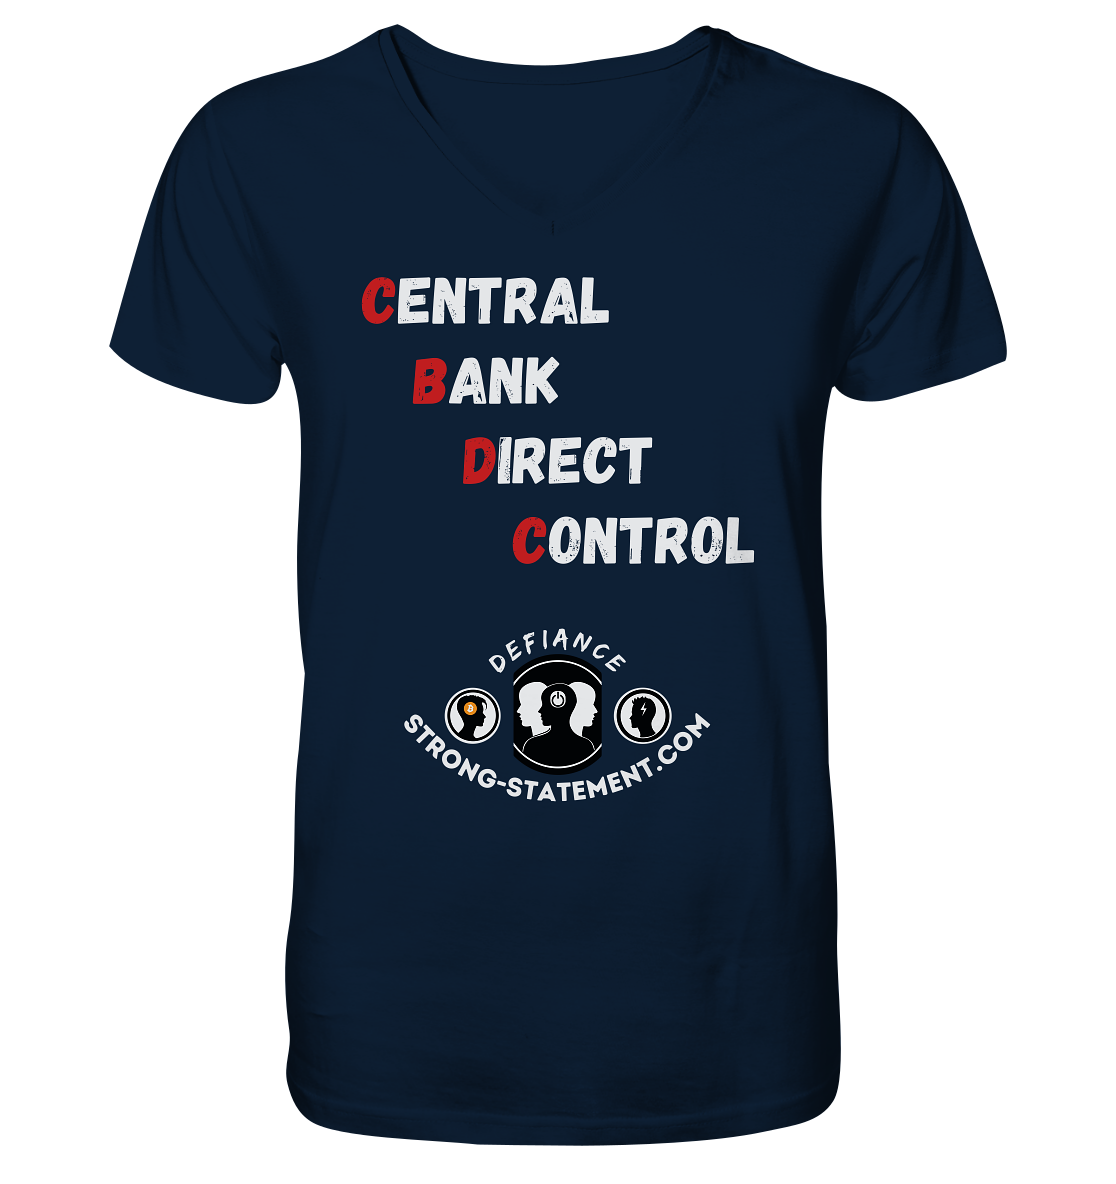 CENTRAL BANK DIRECT CONTROL - Defiance - Strong-Statement.com - V-Neck Shirt